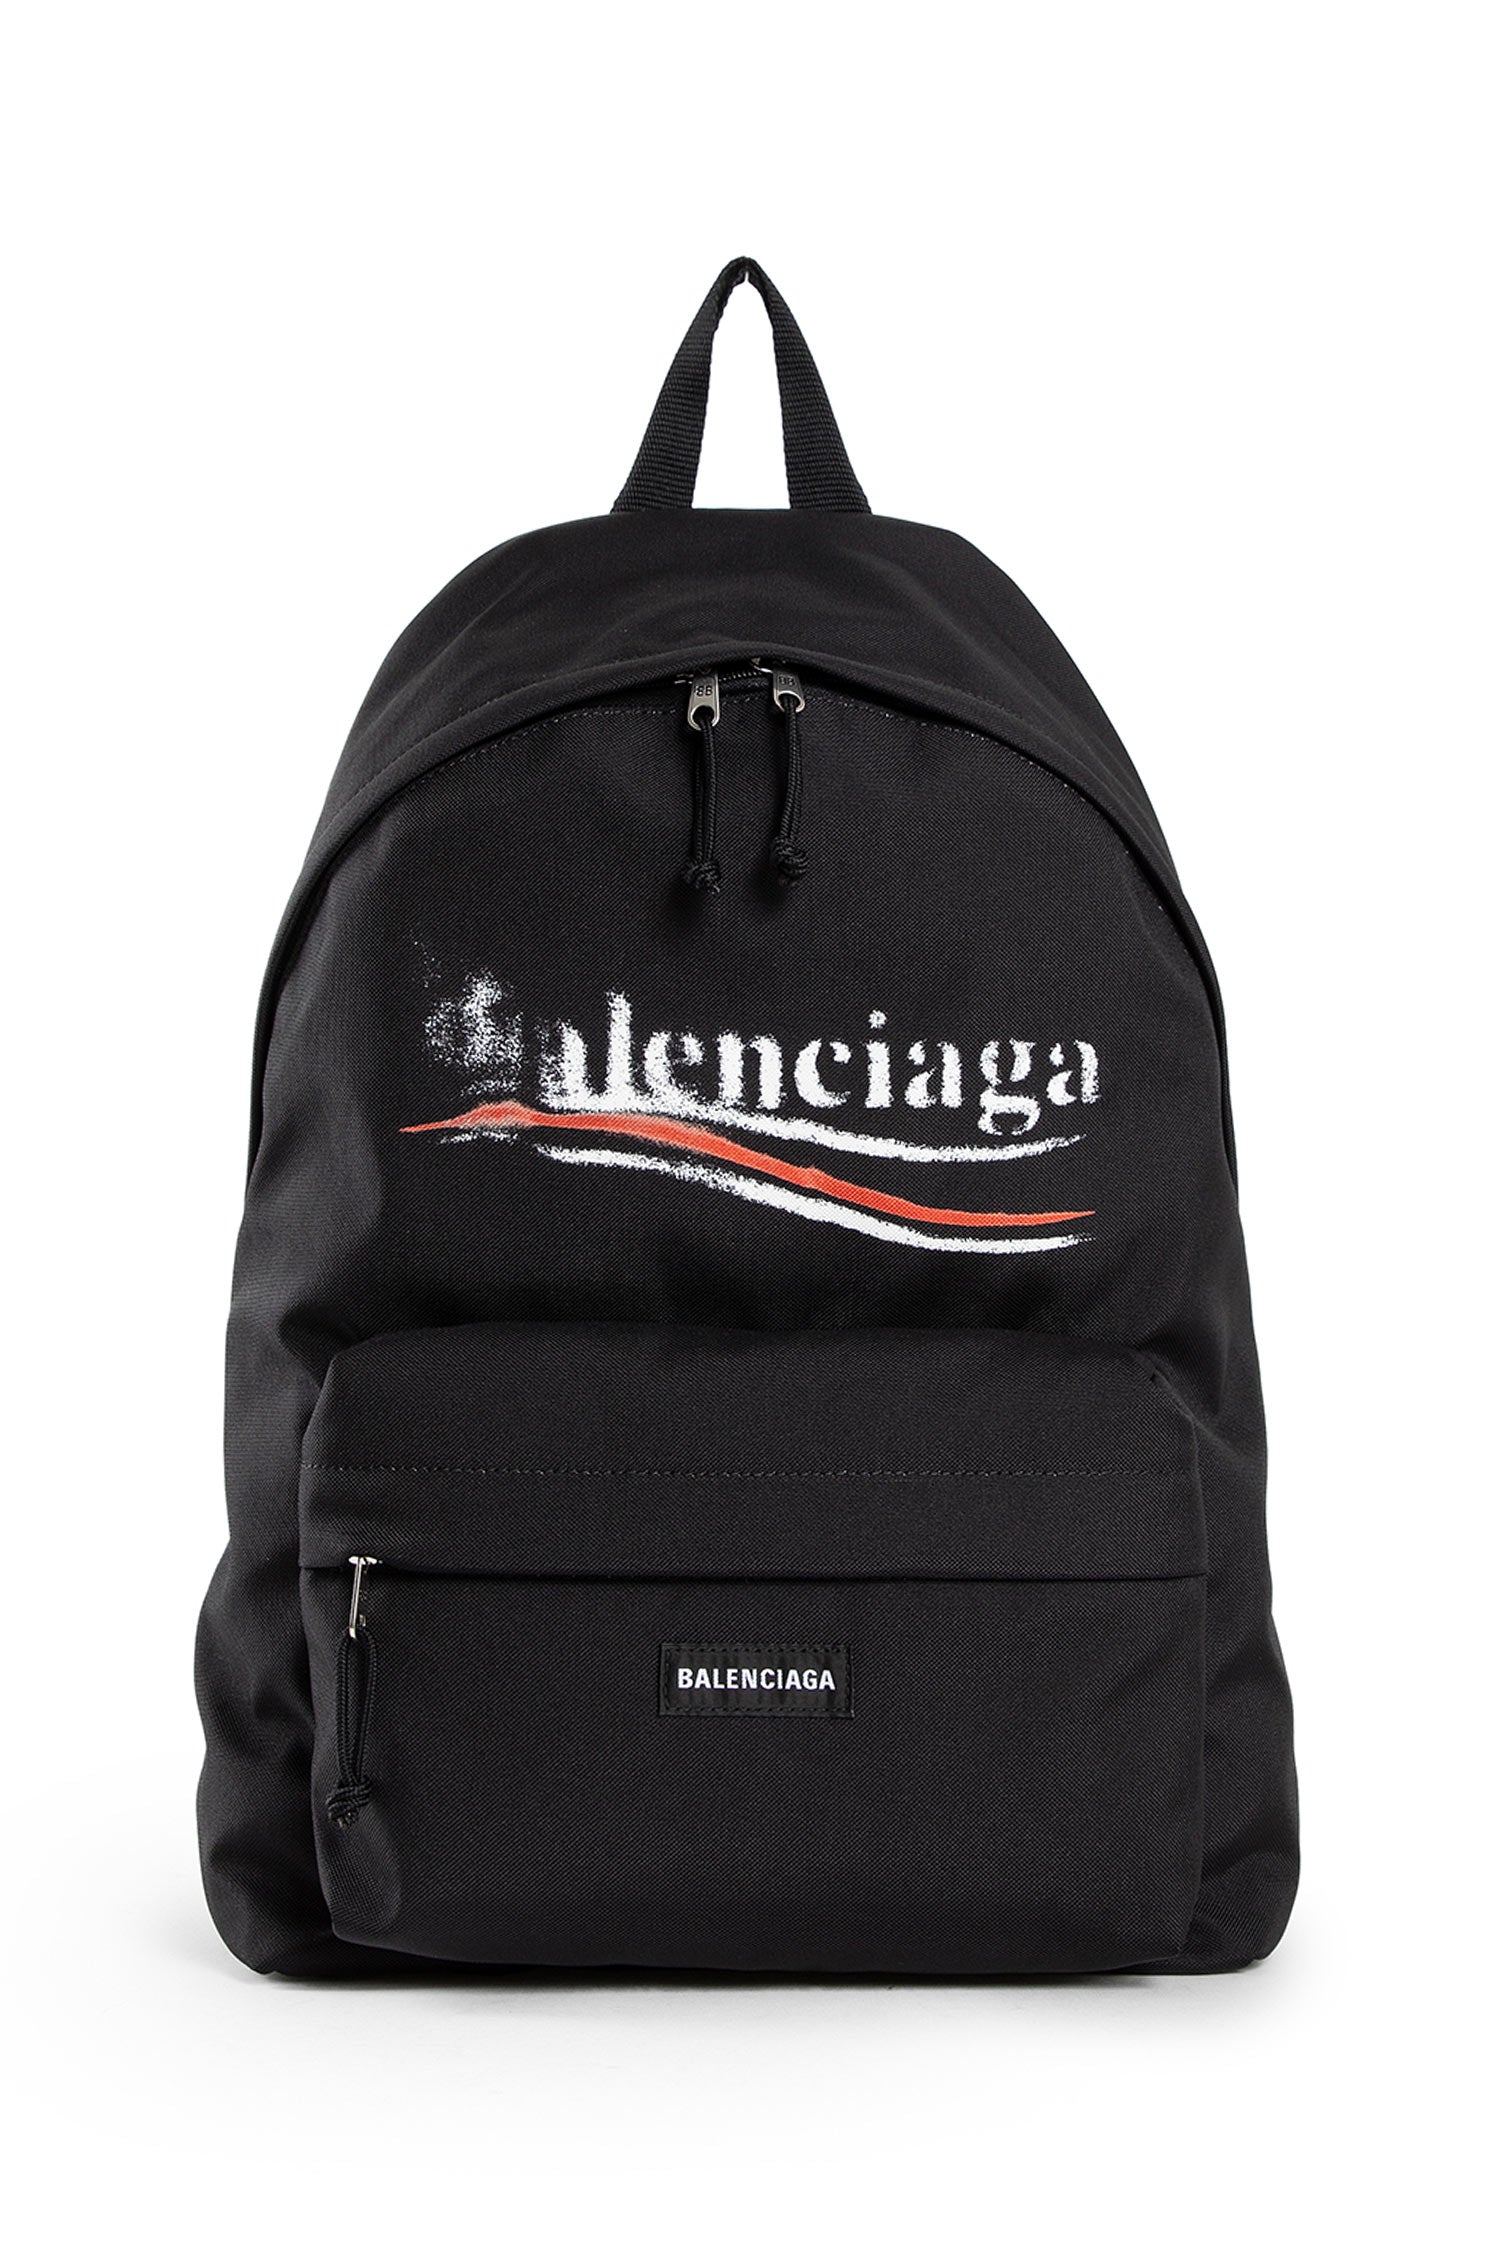 BALENCIAGA UNISEX BLACK BACKPACKS & TRAVEL BAGS